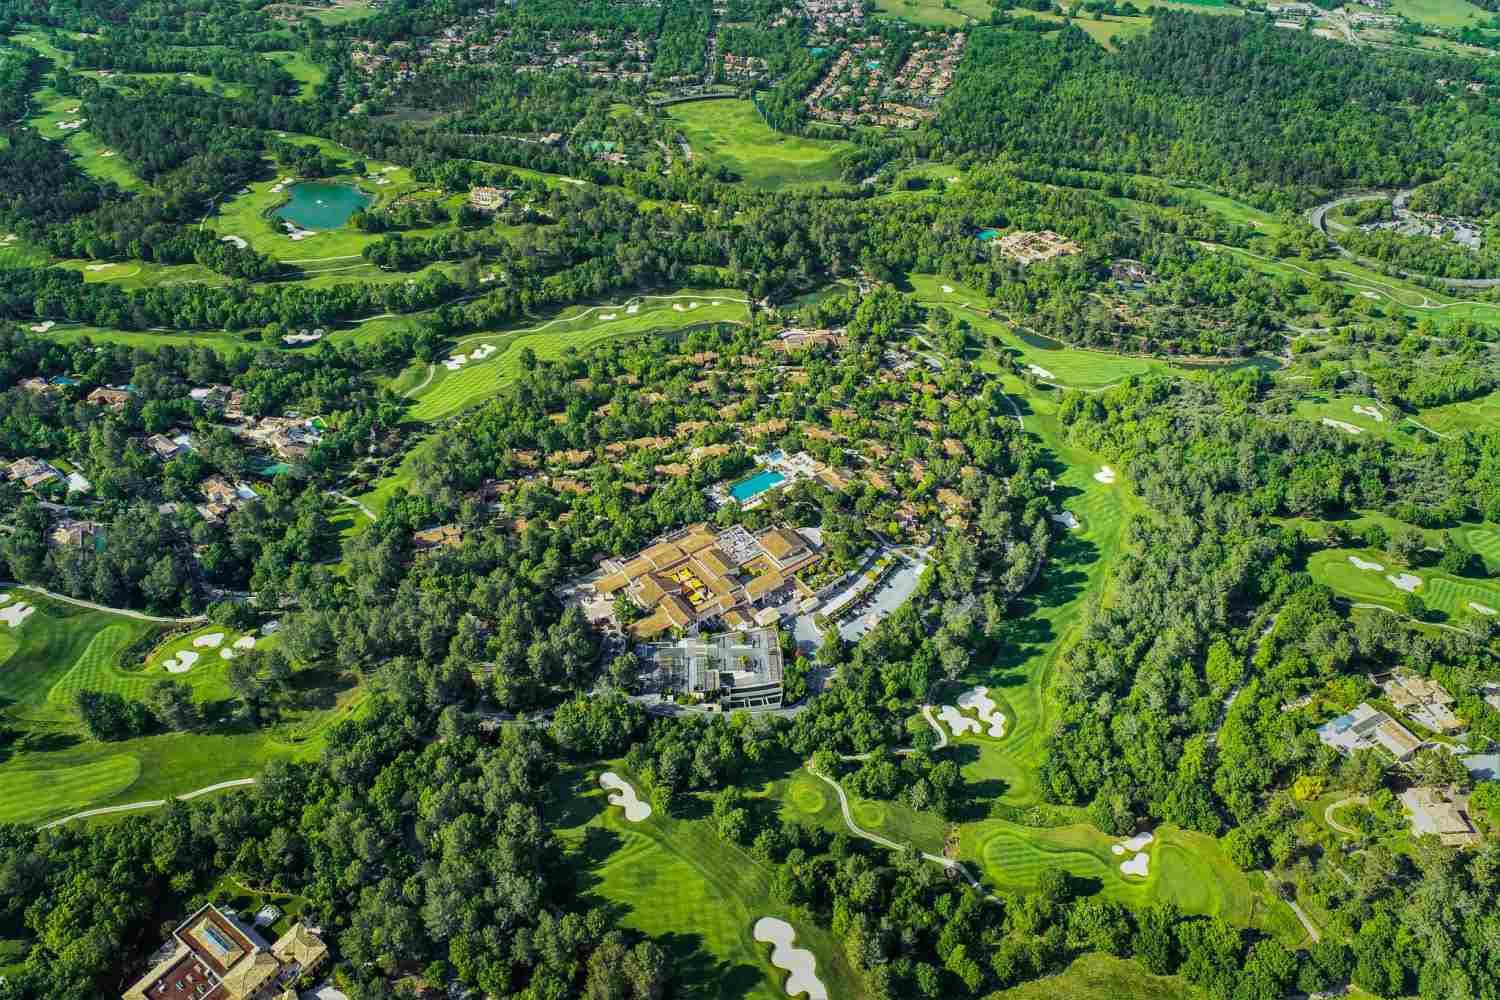 Terre Blanche Hotel Spa Golf Resort Tourretes, Provence - France